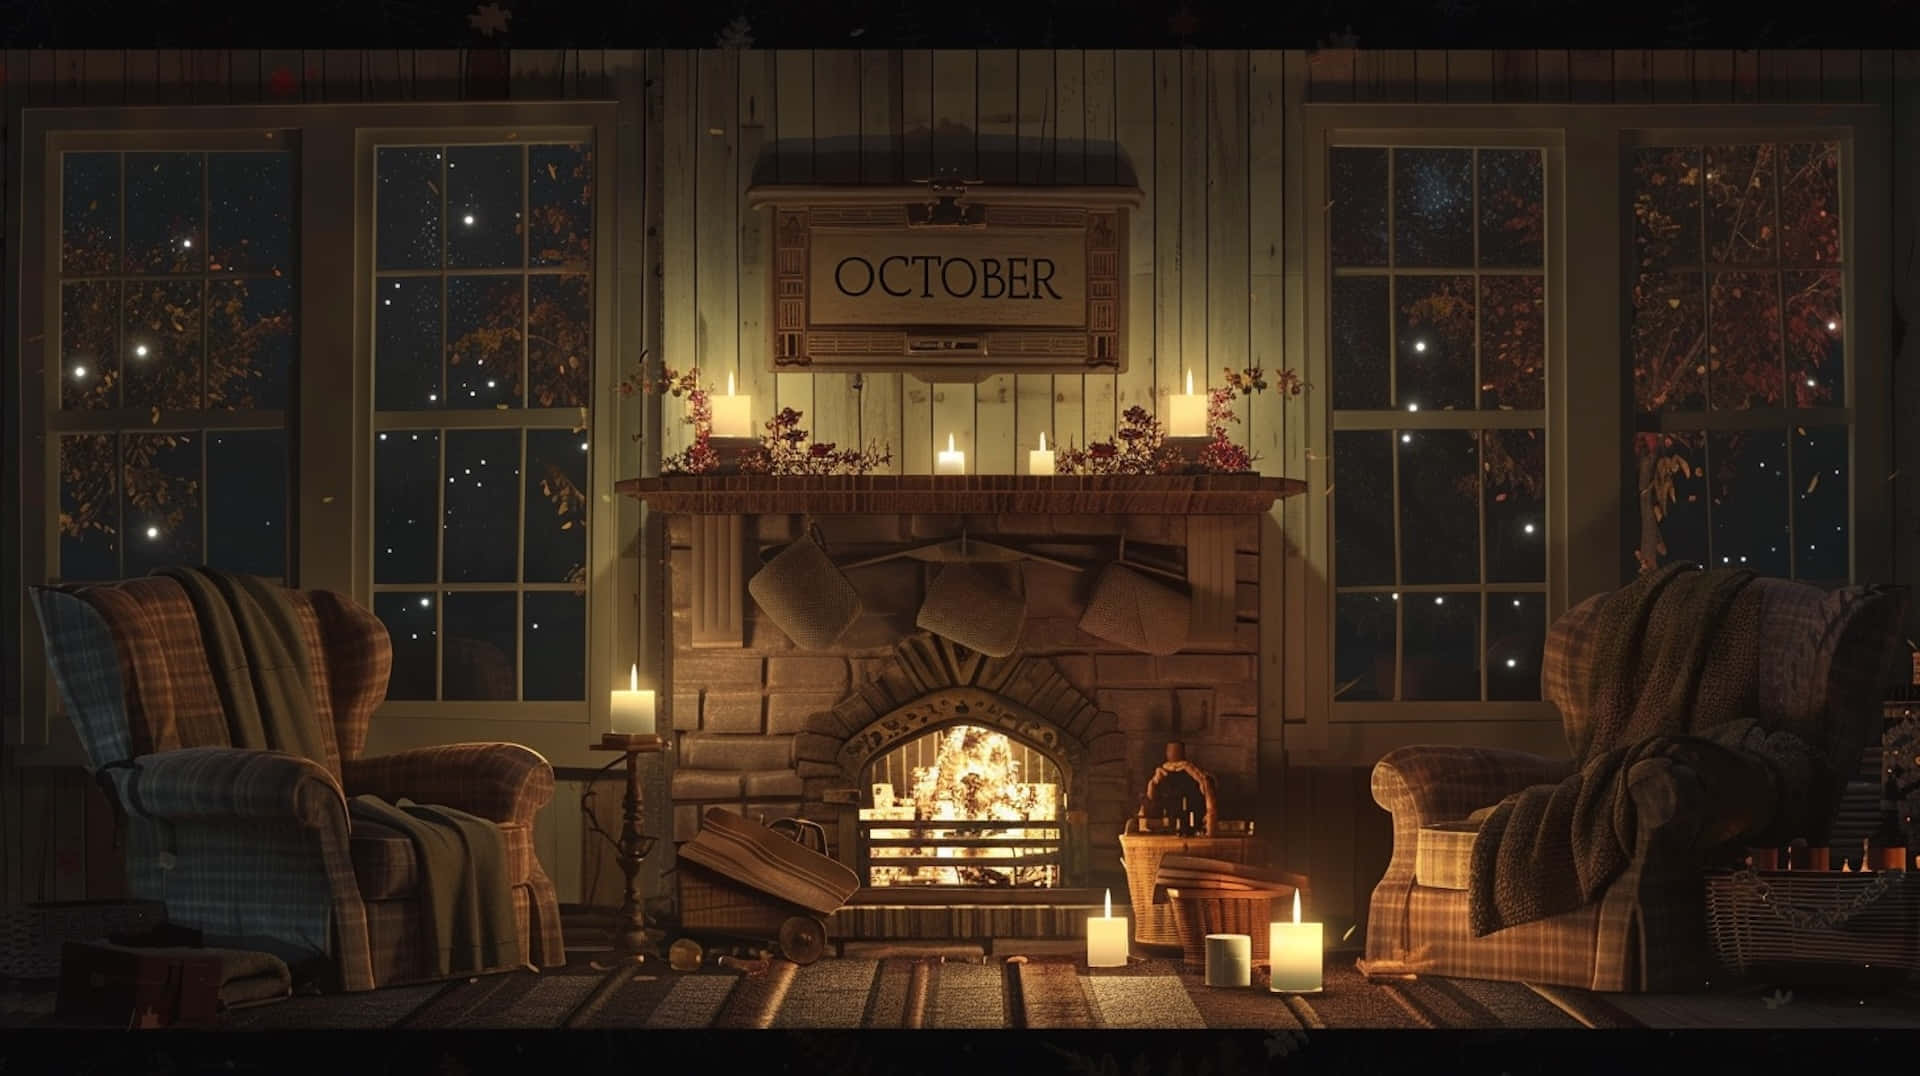 Cozy October Evening Fireplace Scene Wallpaper